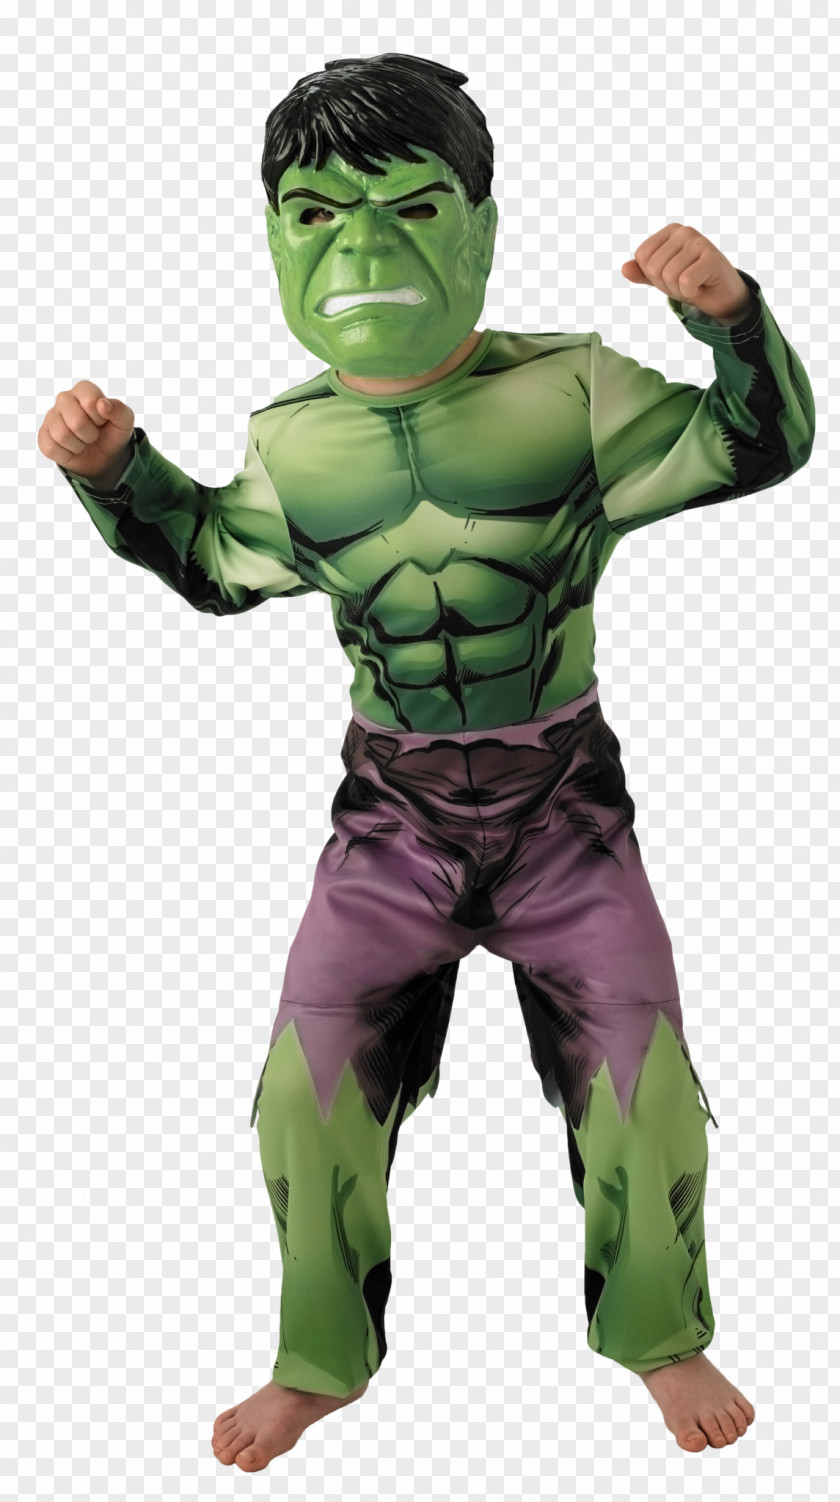 Hulk Spider-Man Costume Party Superhero PNG